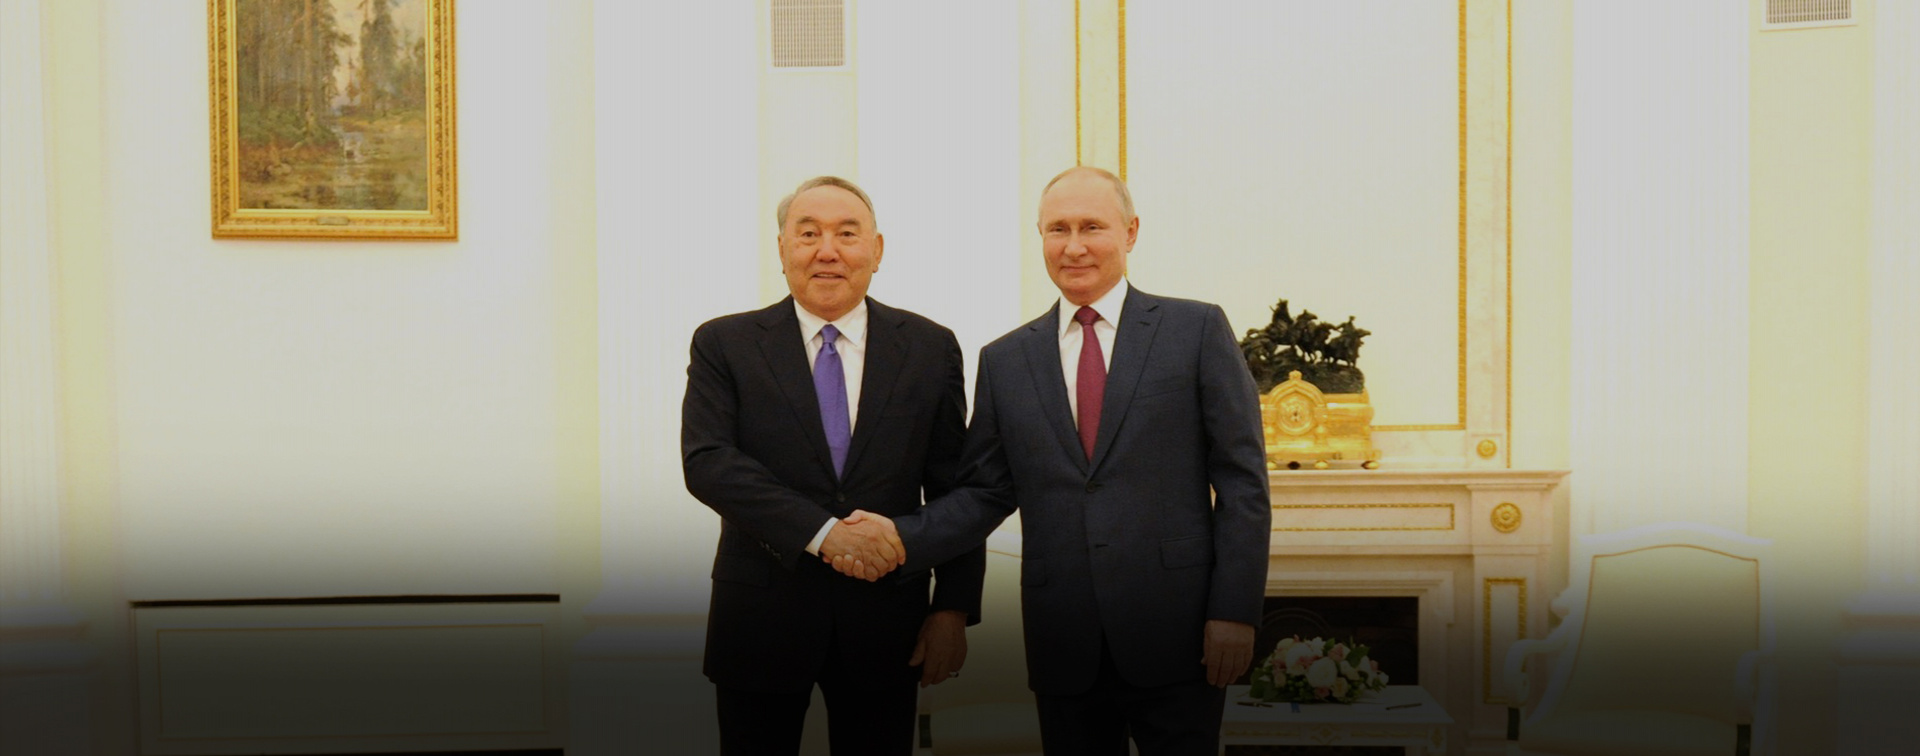 На каком канале будут поздравления президента. Cz владелец Бинанс встреча с президентом Казахстана.